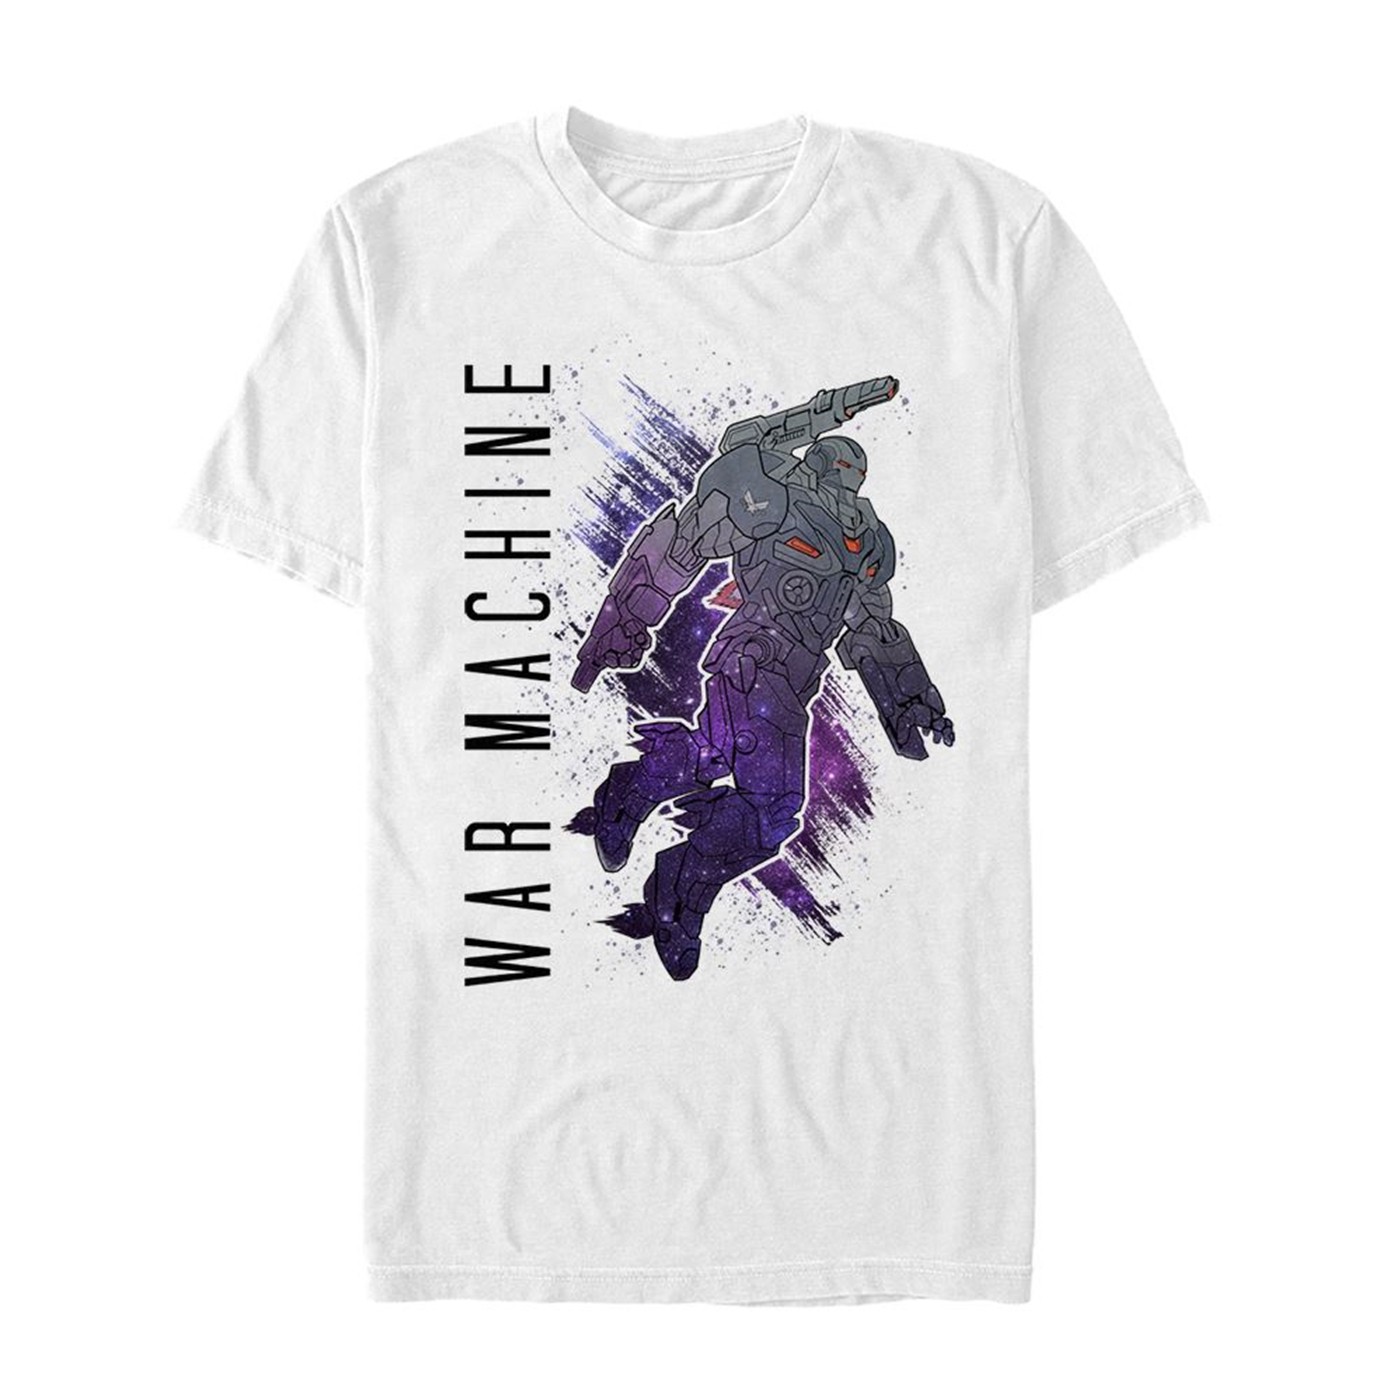 Avenger Endgame War Machine Painted with Text Men's T-Shirt